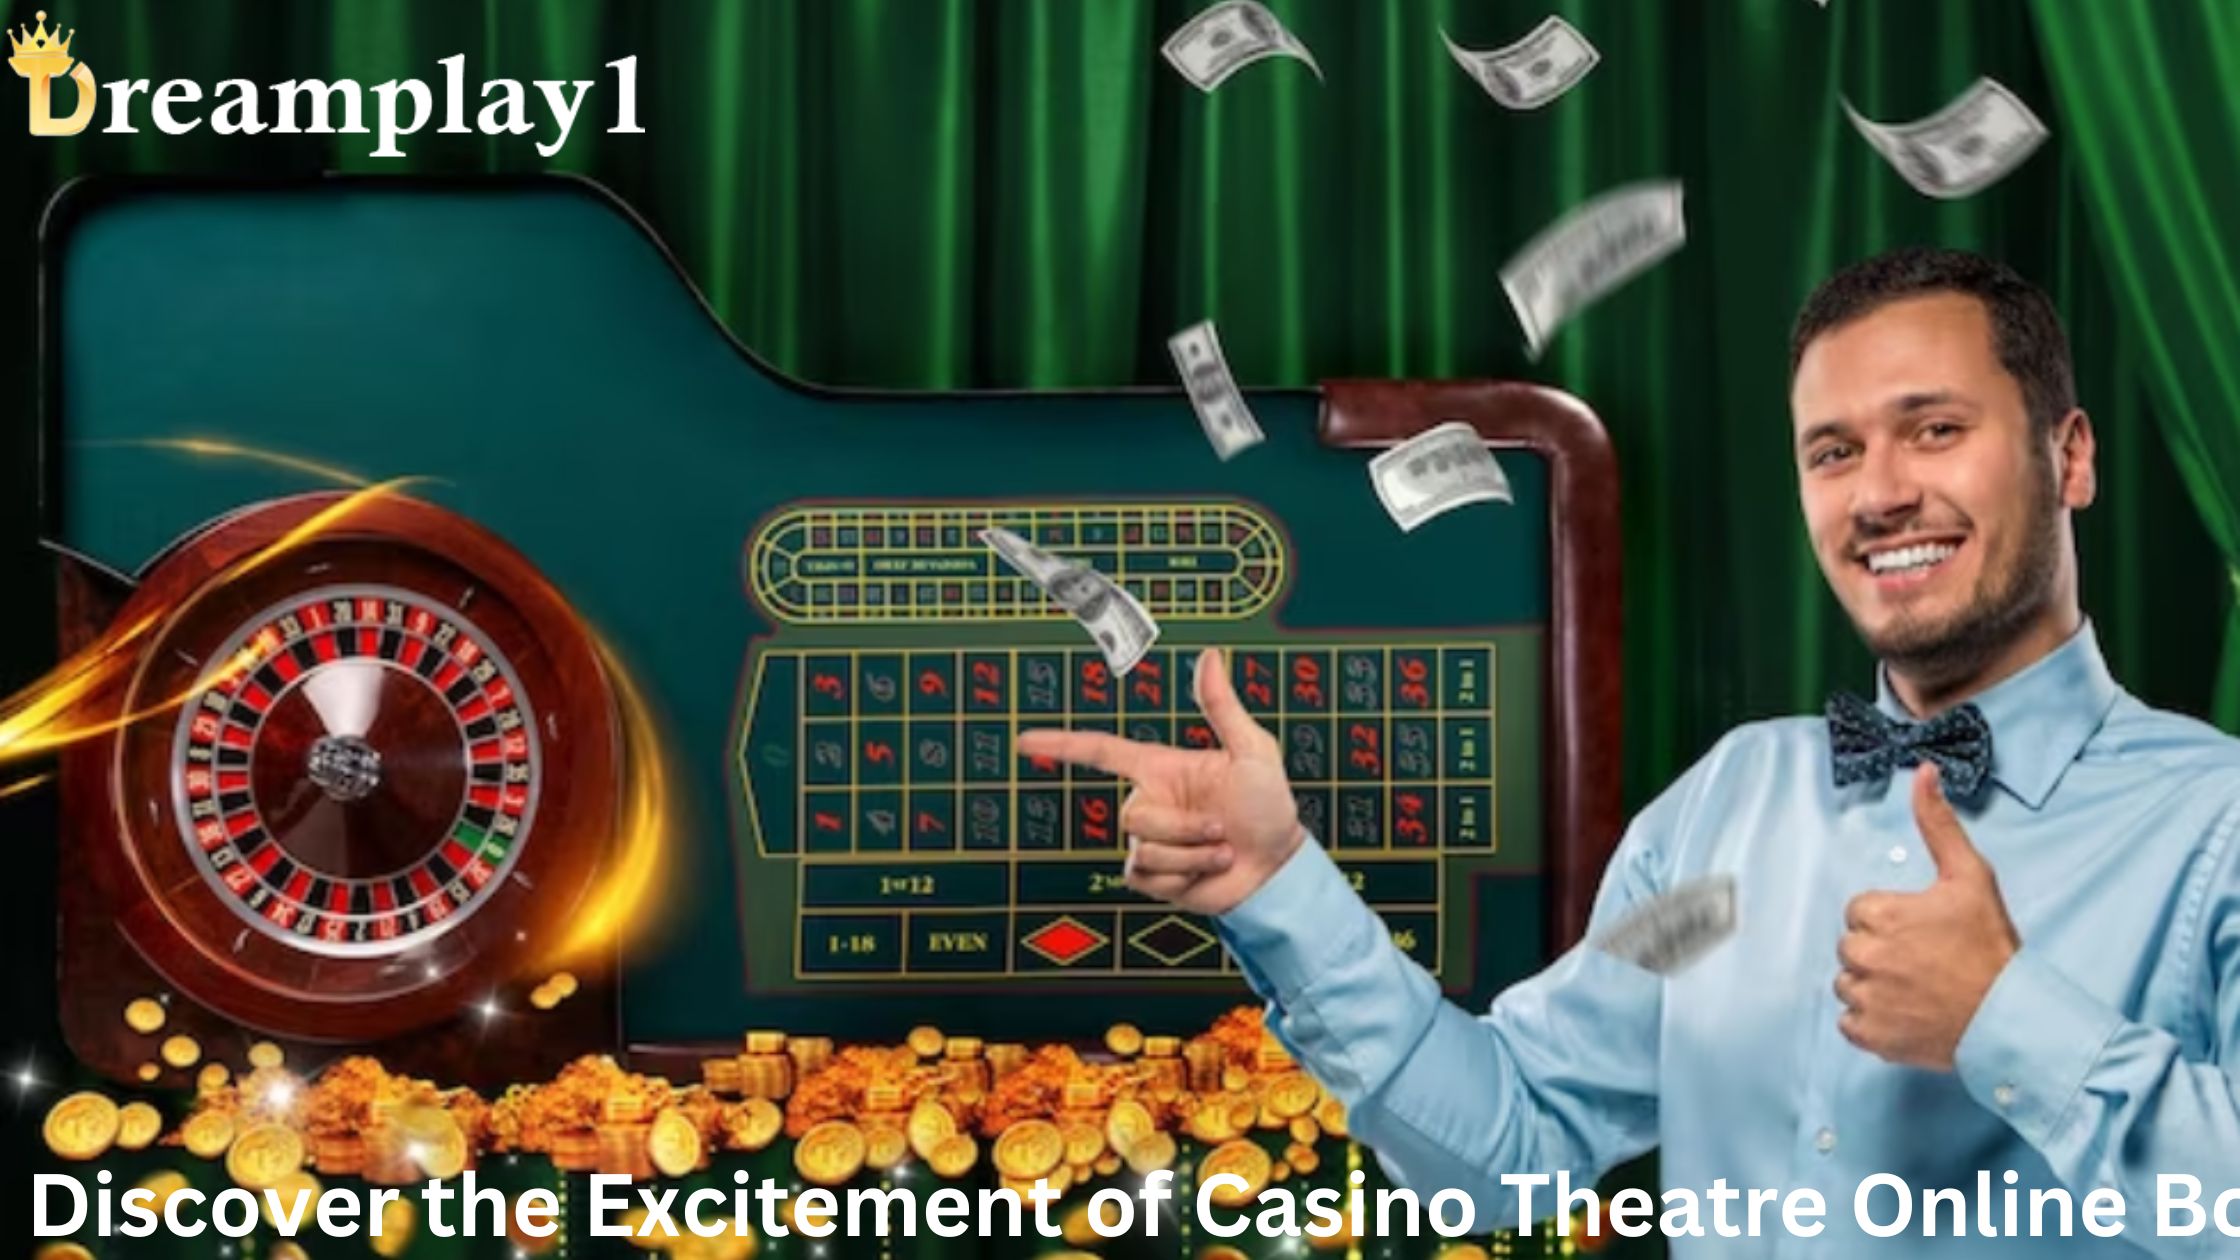 Casino Theatre Online Booking